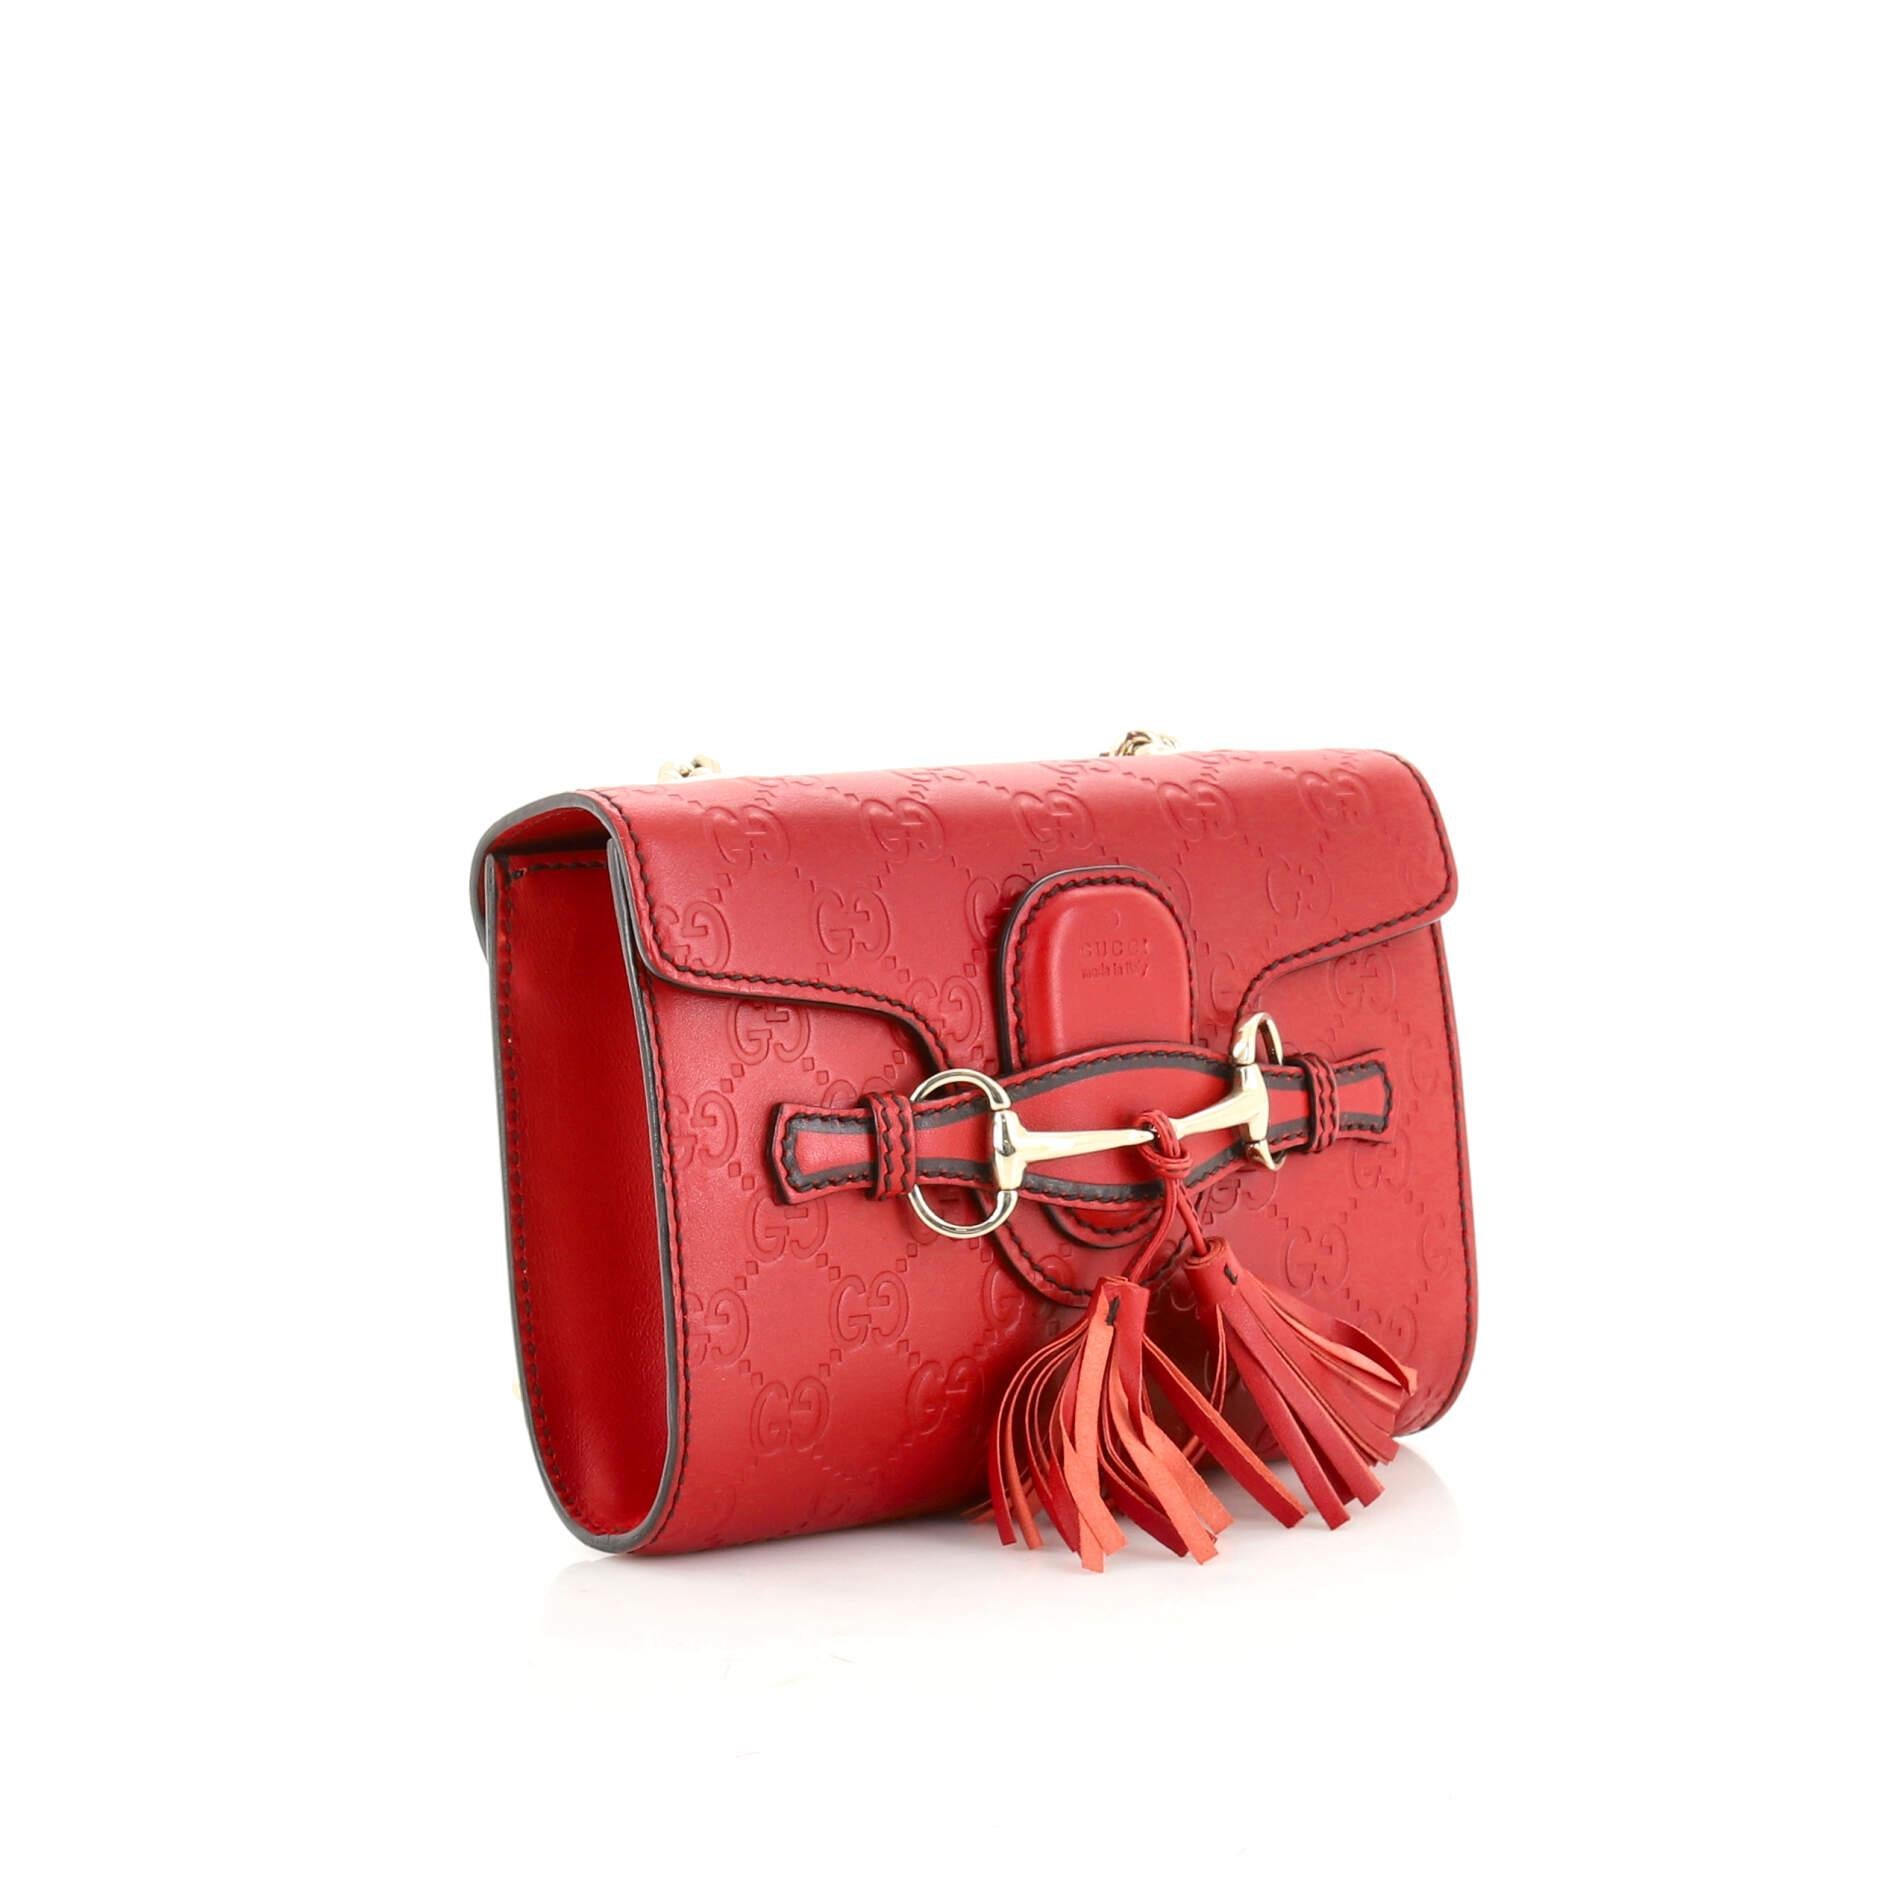 Red Gucci Emily Chain Flap Bag Guccissima Leather Mini